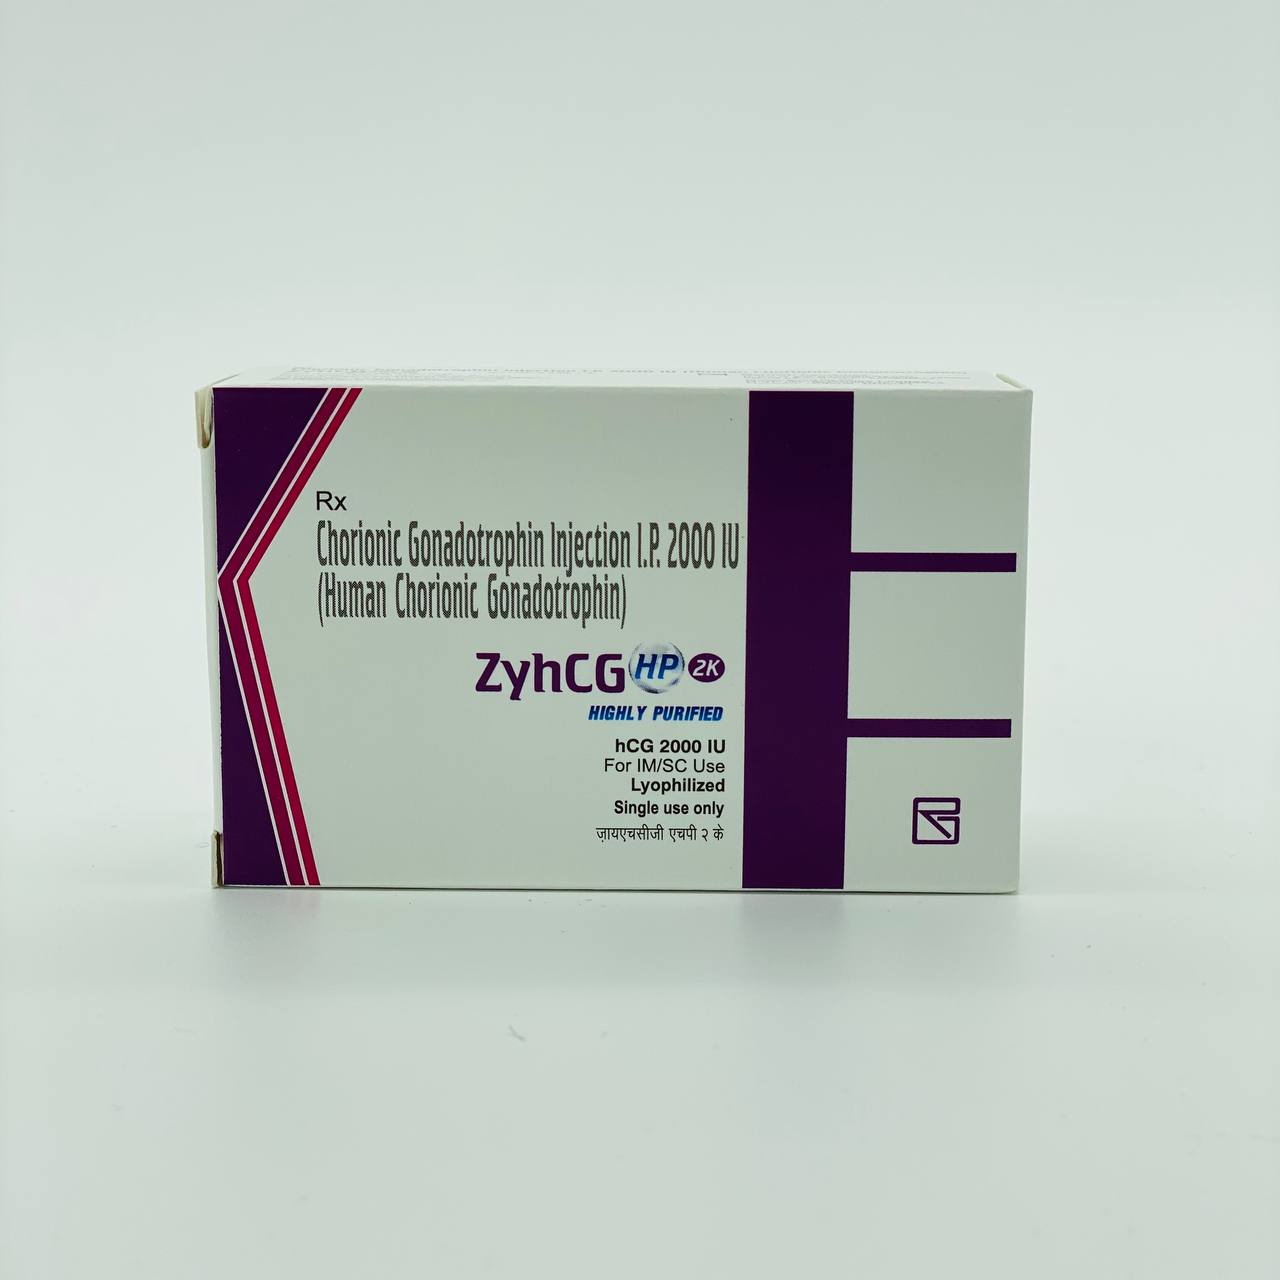 Chorionic Gonadotropin Injection I.P. 2000 IU ZyhCg Gonadotropina